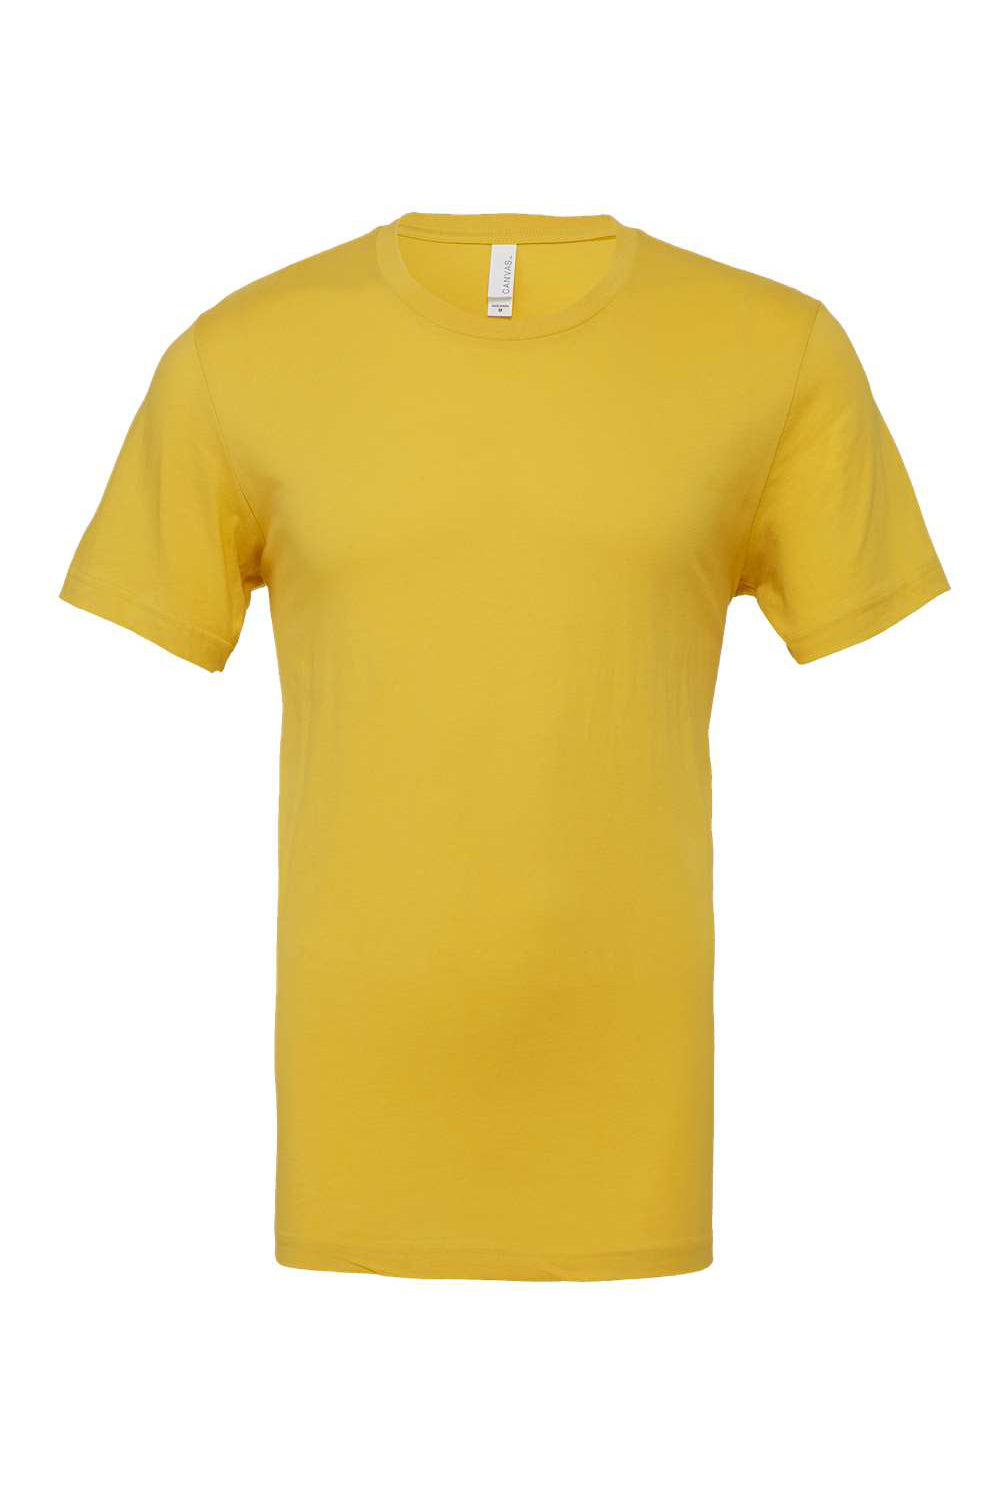 Bella + Canvas BC3001/3001C Mens Jersey Short Sleeve Crewneck T-Shirt Maize Yellow Flat Front